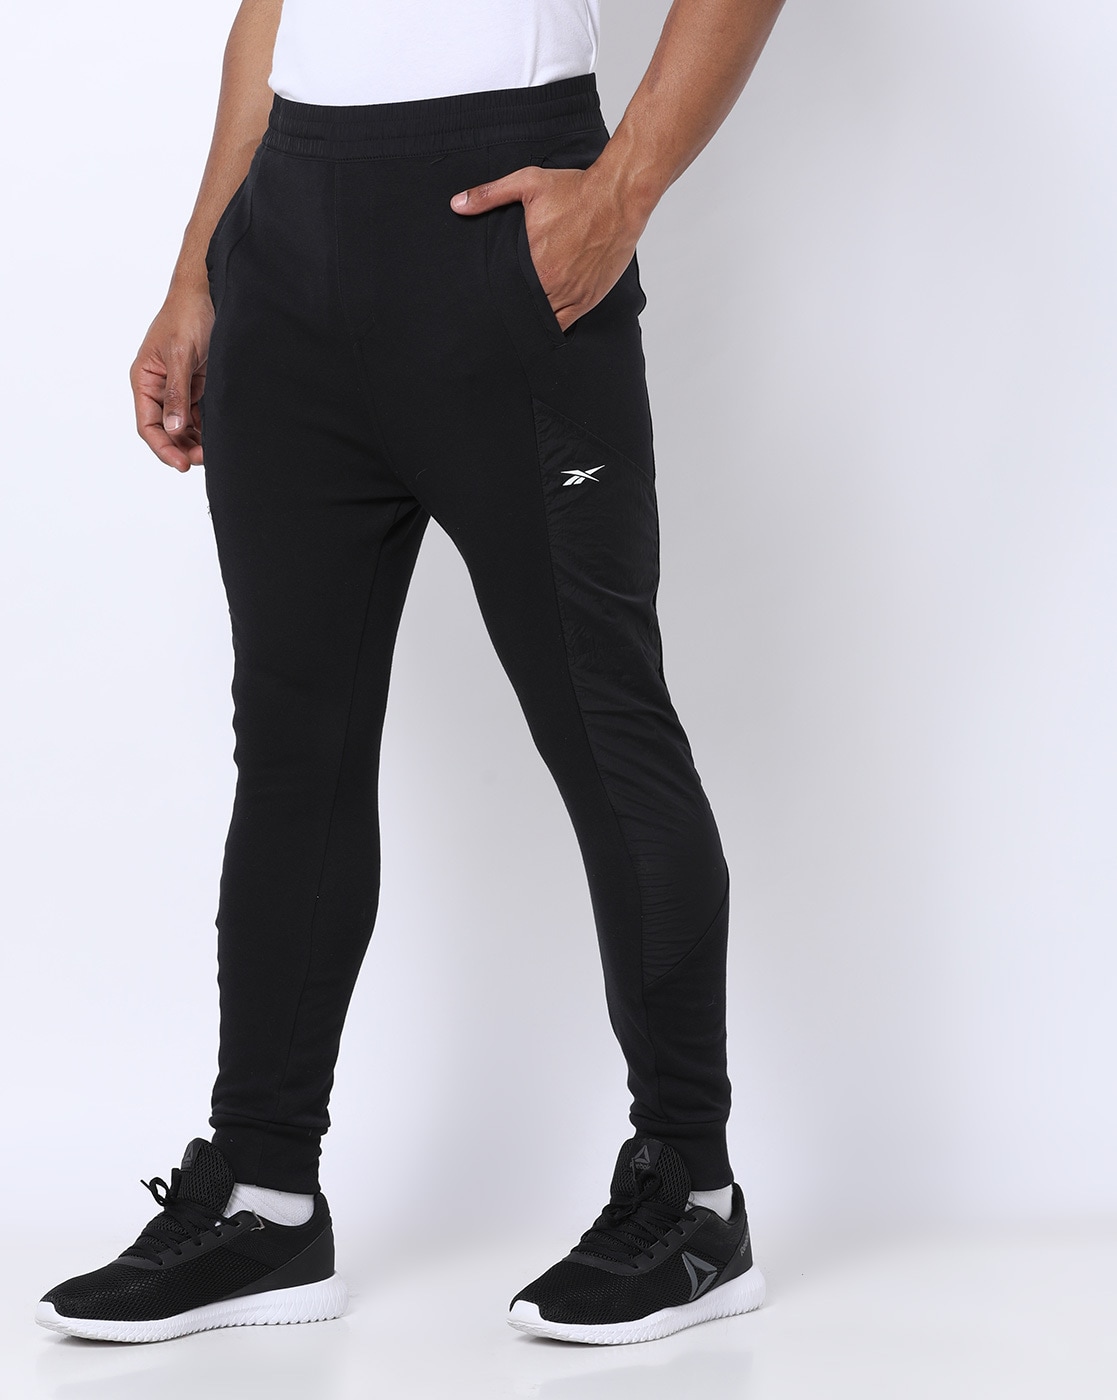 Buy Black Track Pants for Men by Reebok 